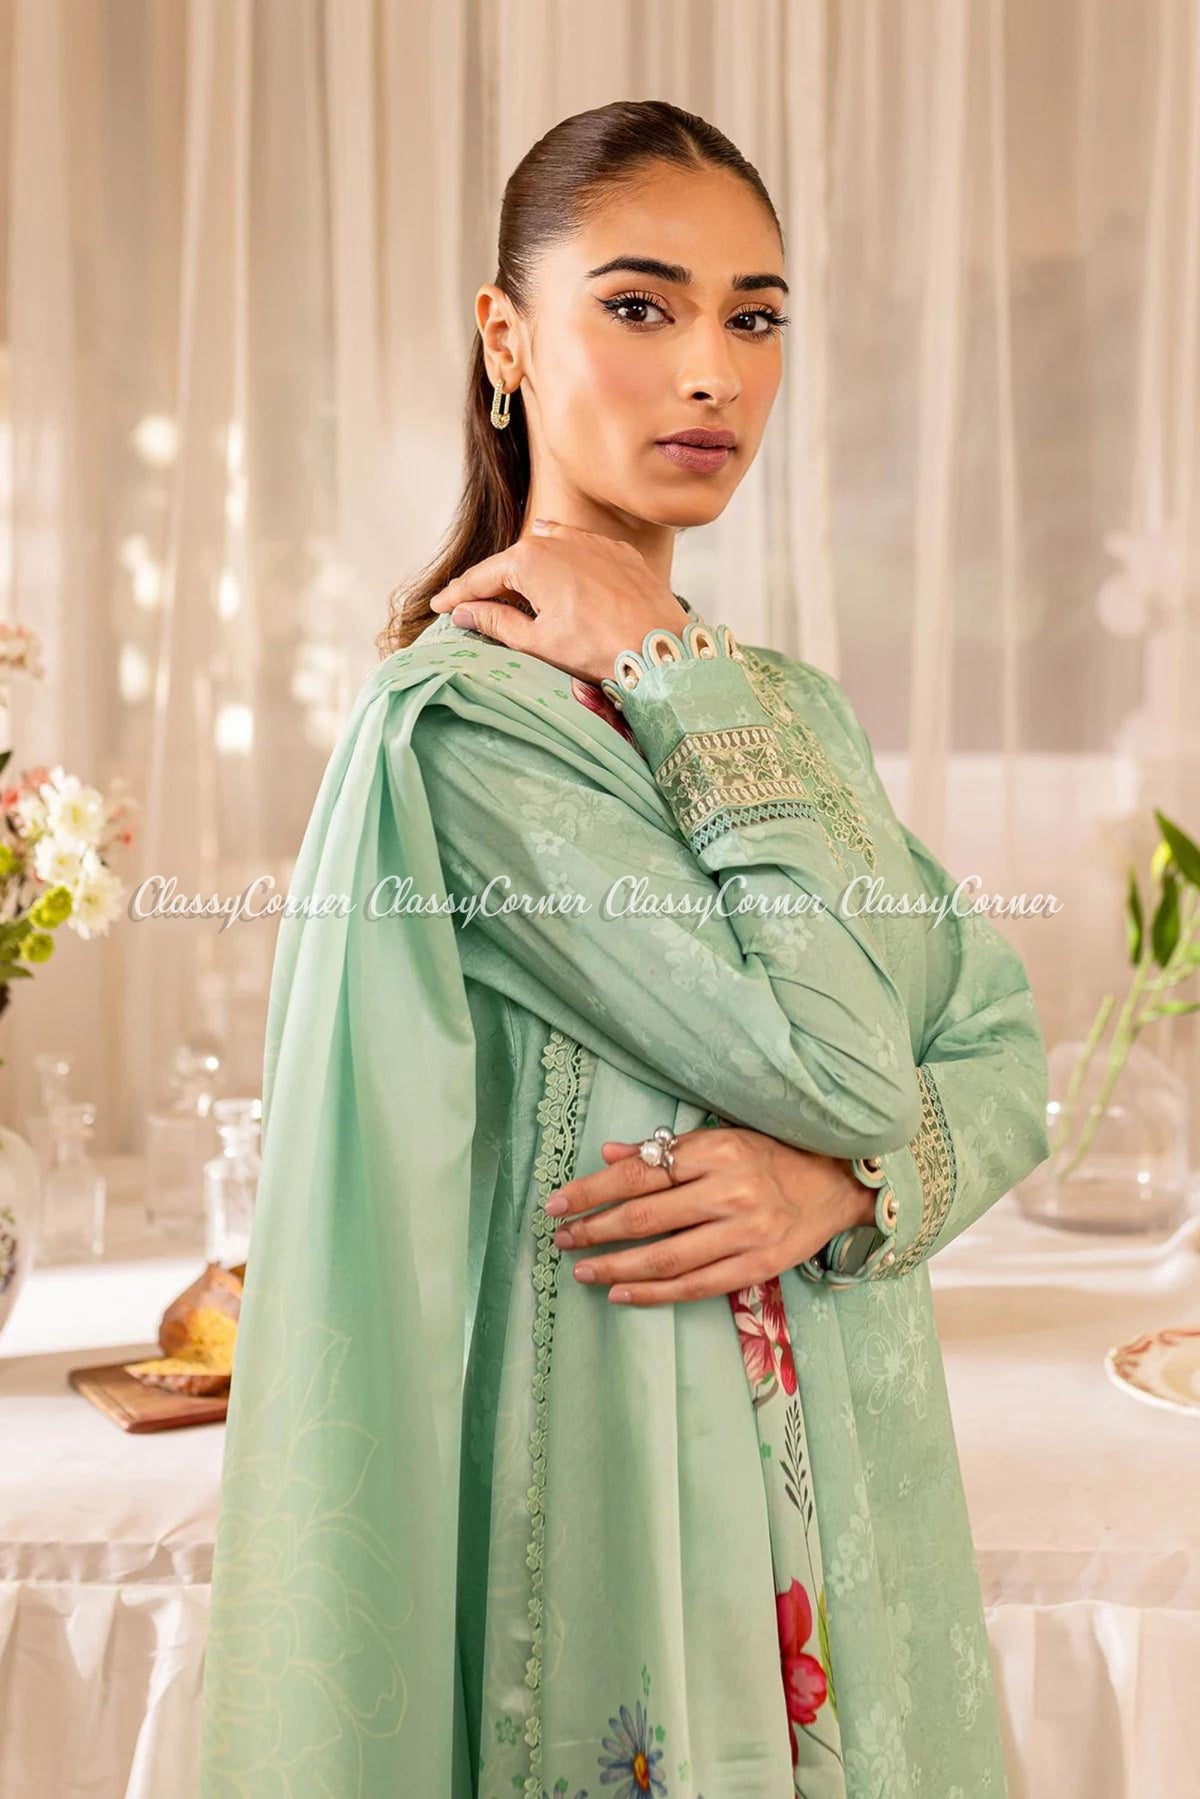 Pakistani formal fashion for women